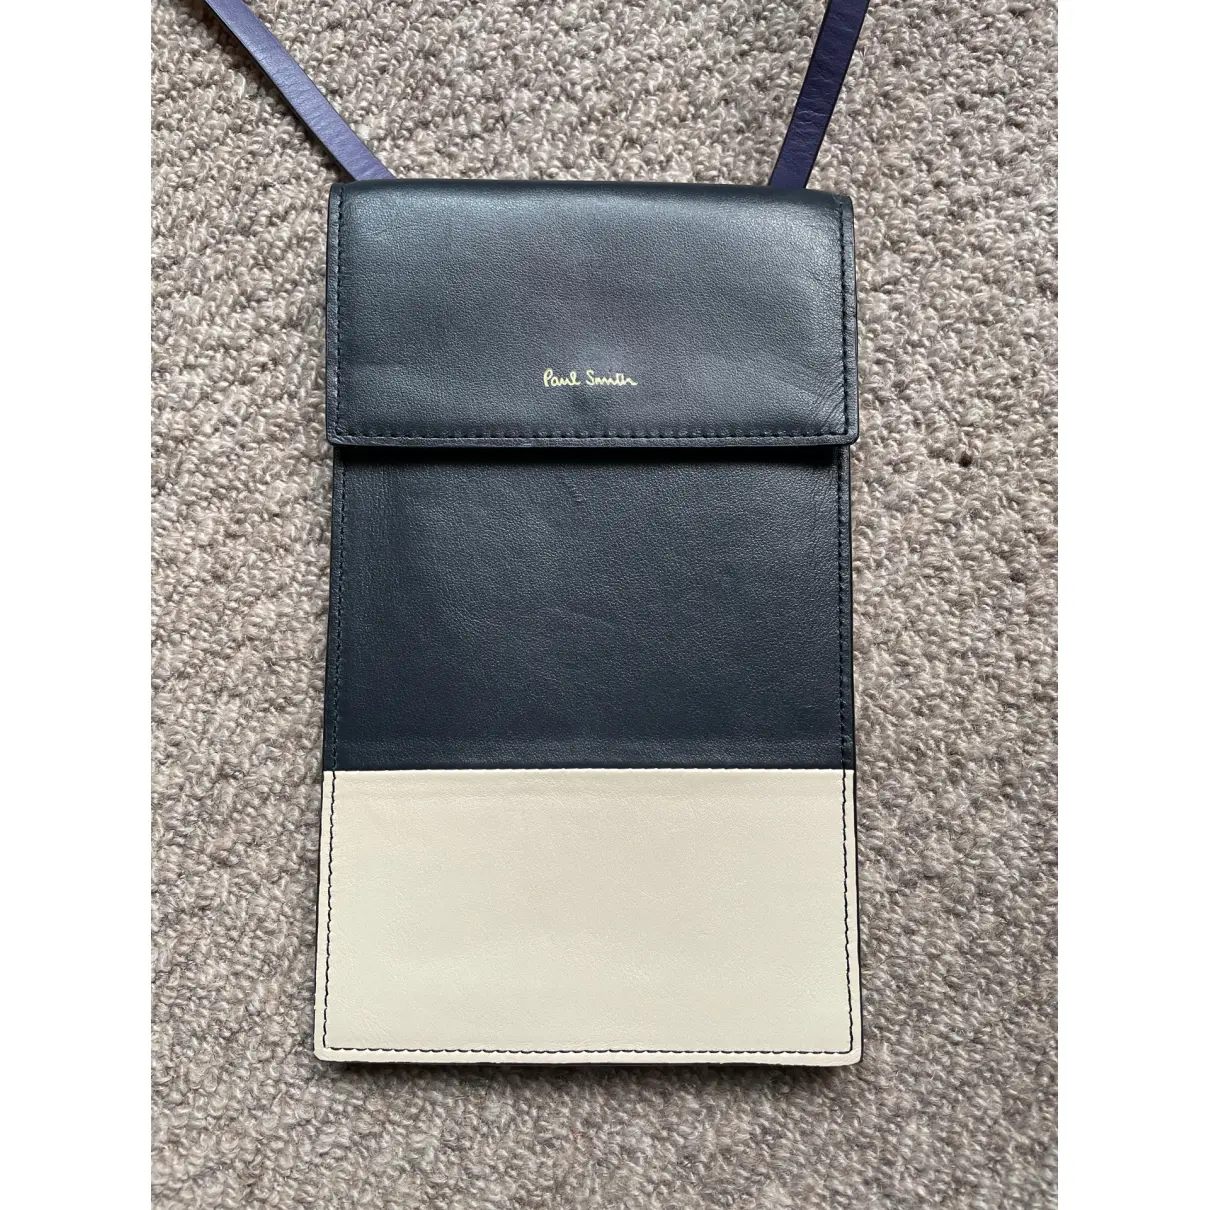 Buy Paul Smith Leather handbag online